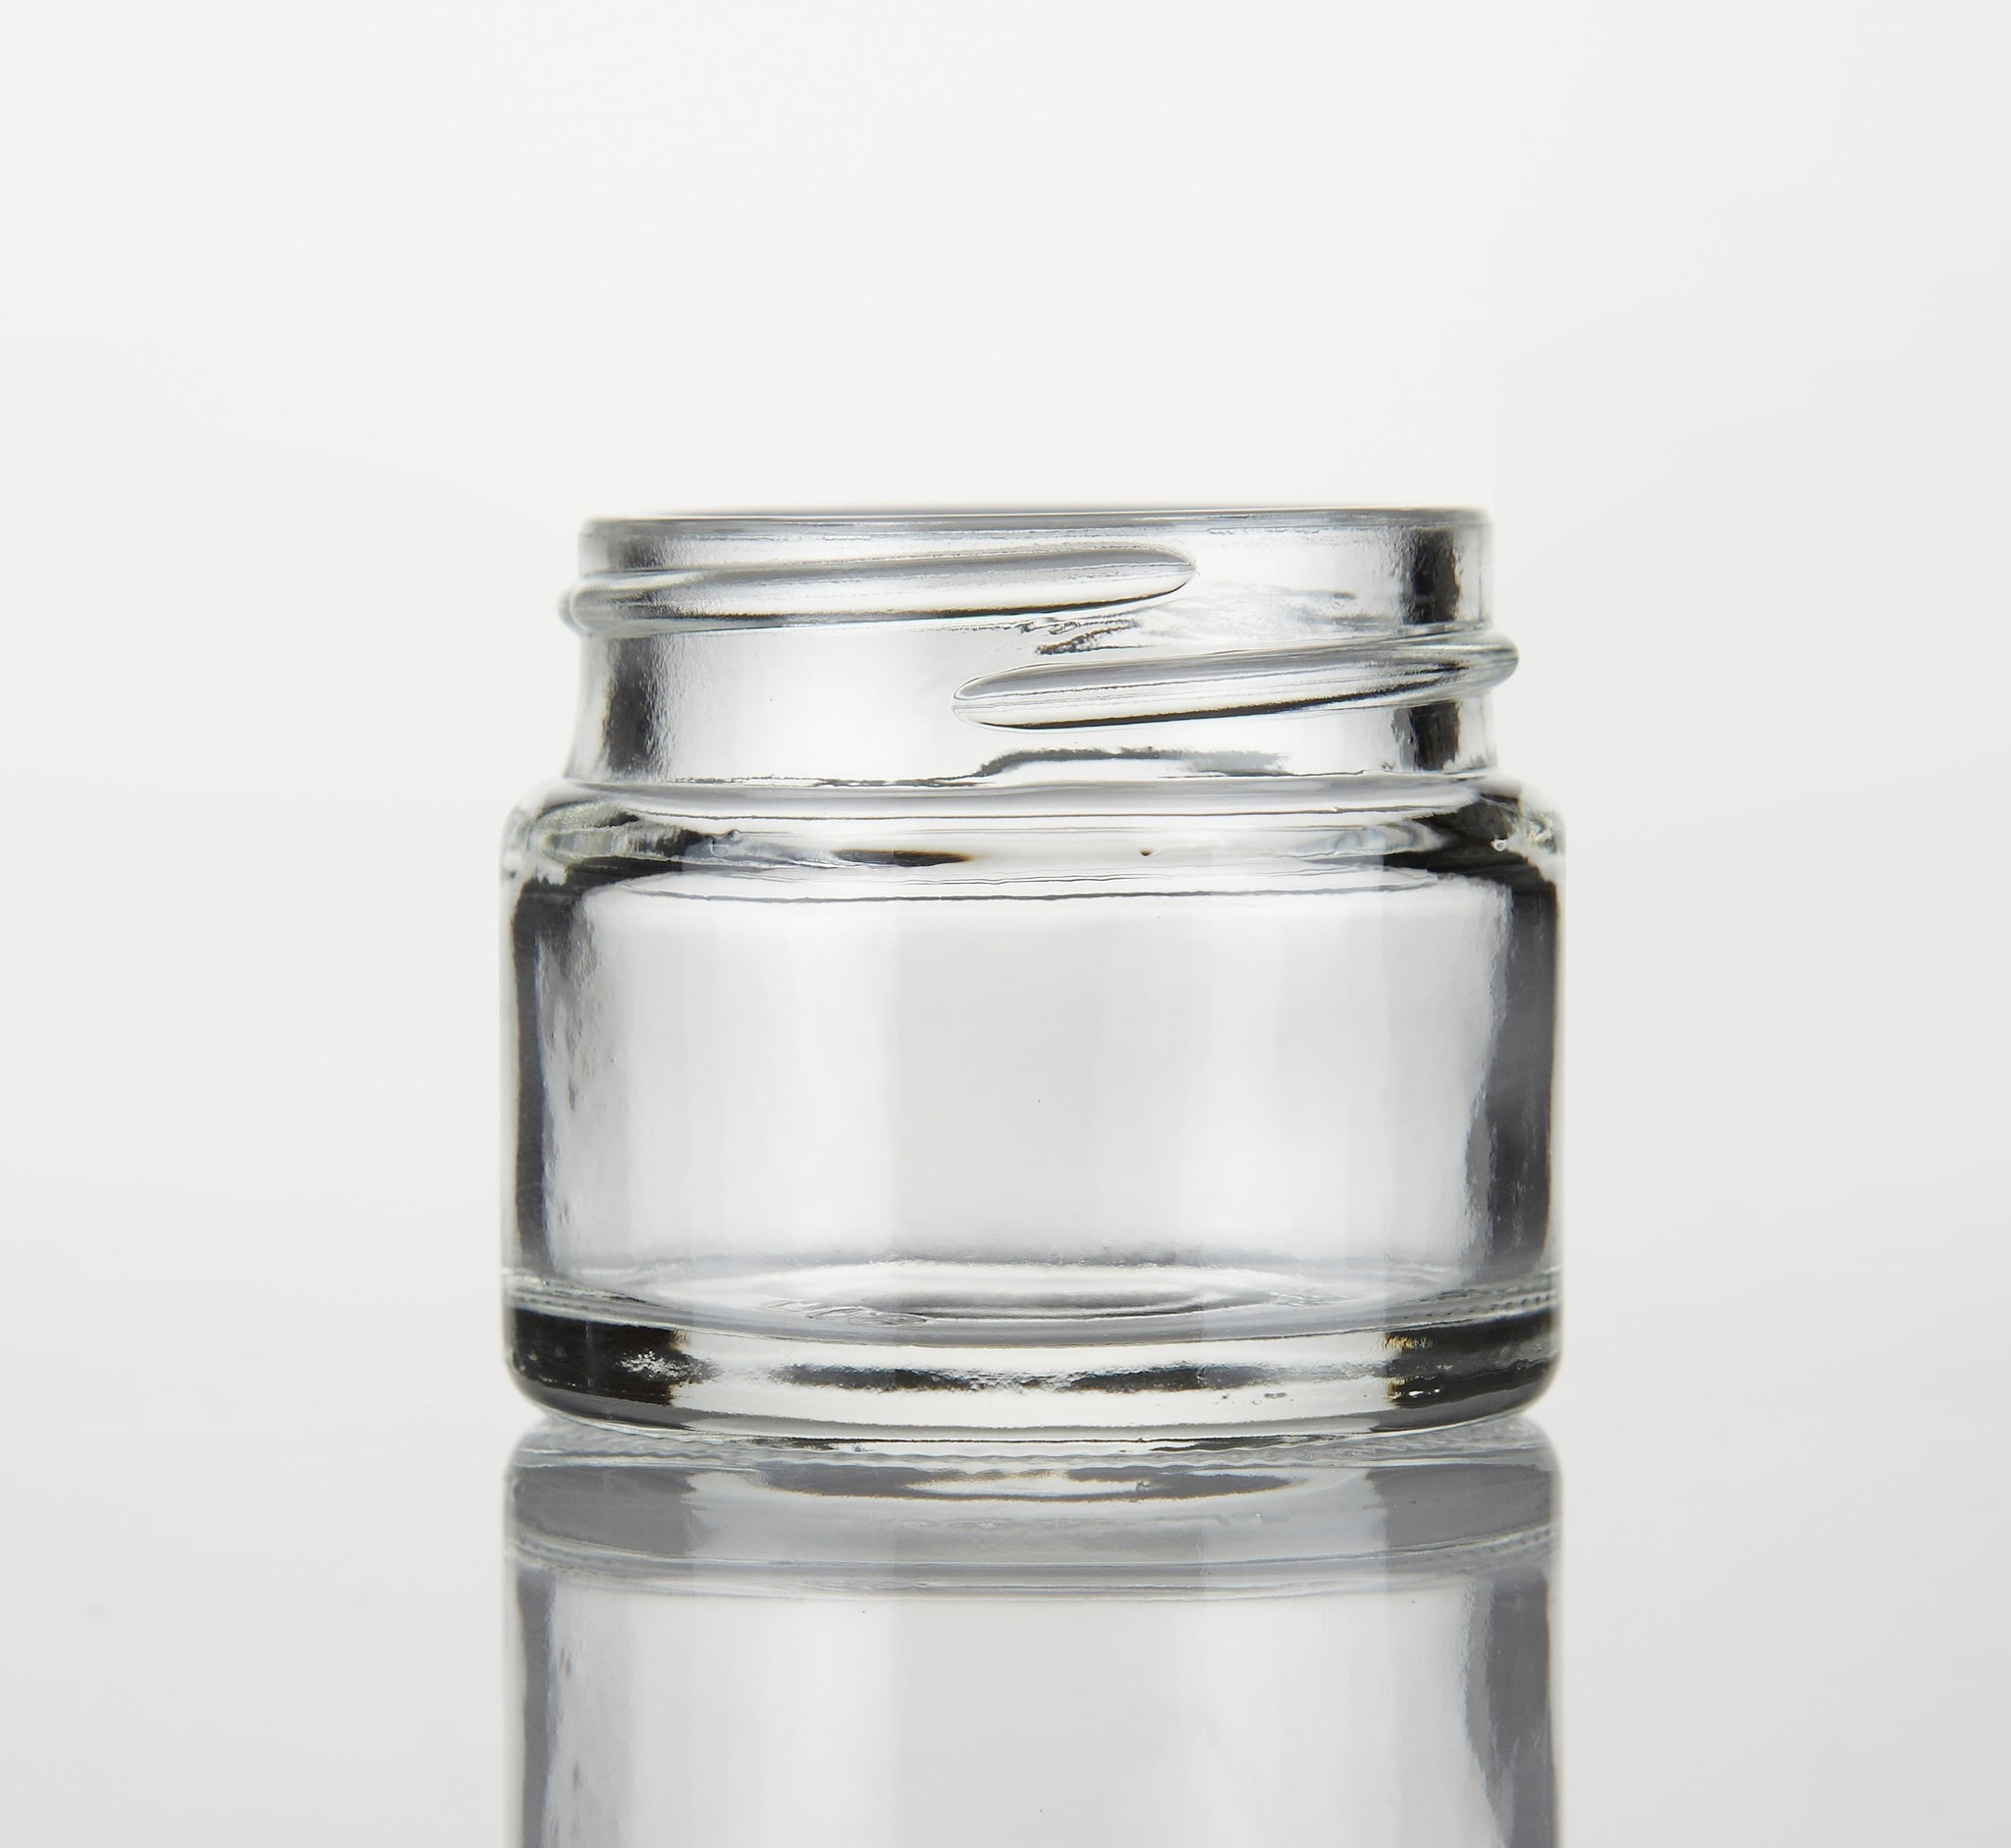 15ml Clear Glass Round Ointment Jar